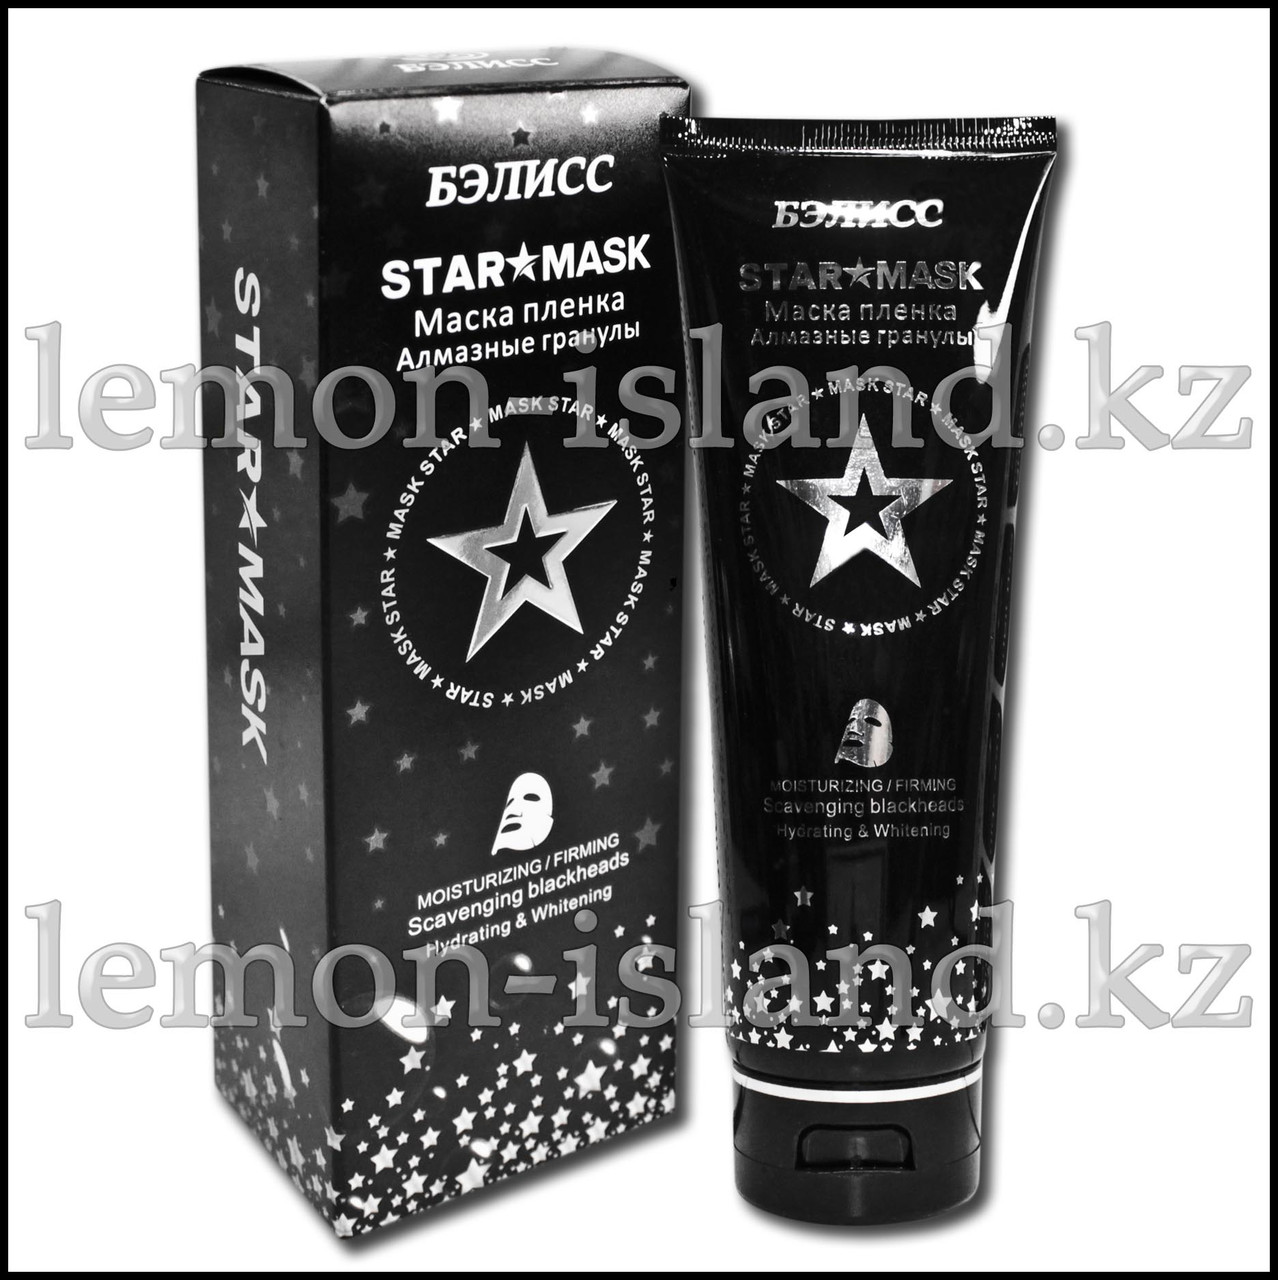 Маска-плёнка для чистки лица Star Mask от Бэлисс.